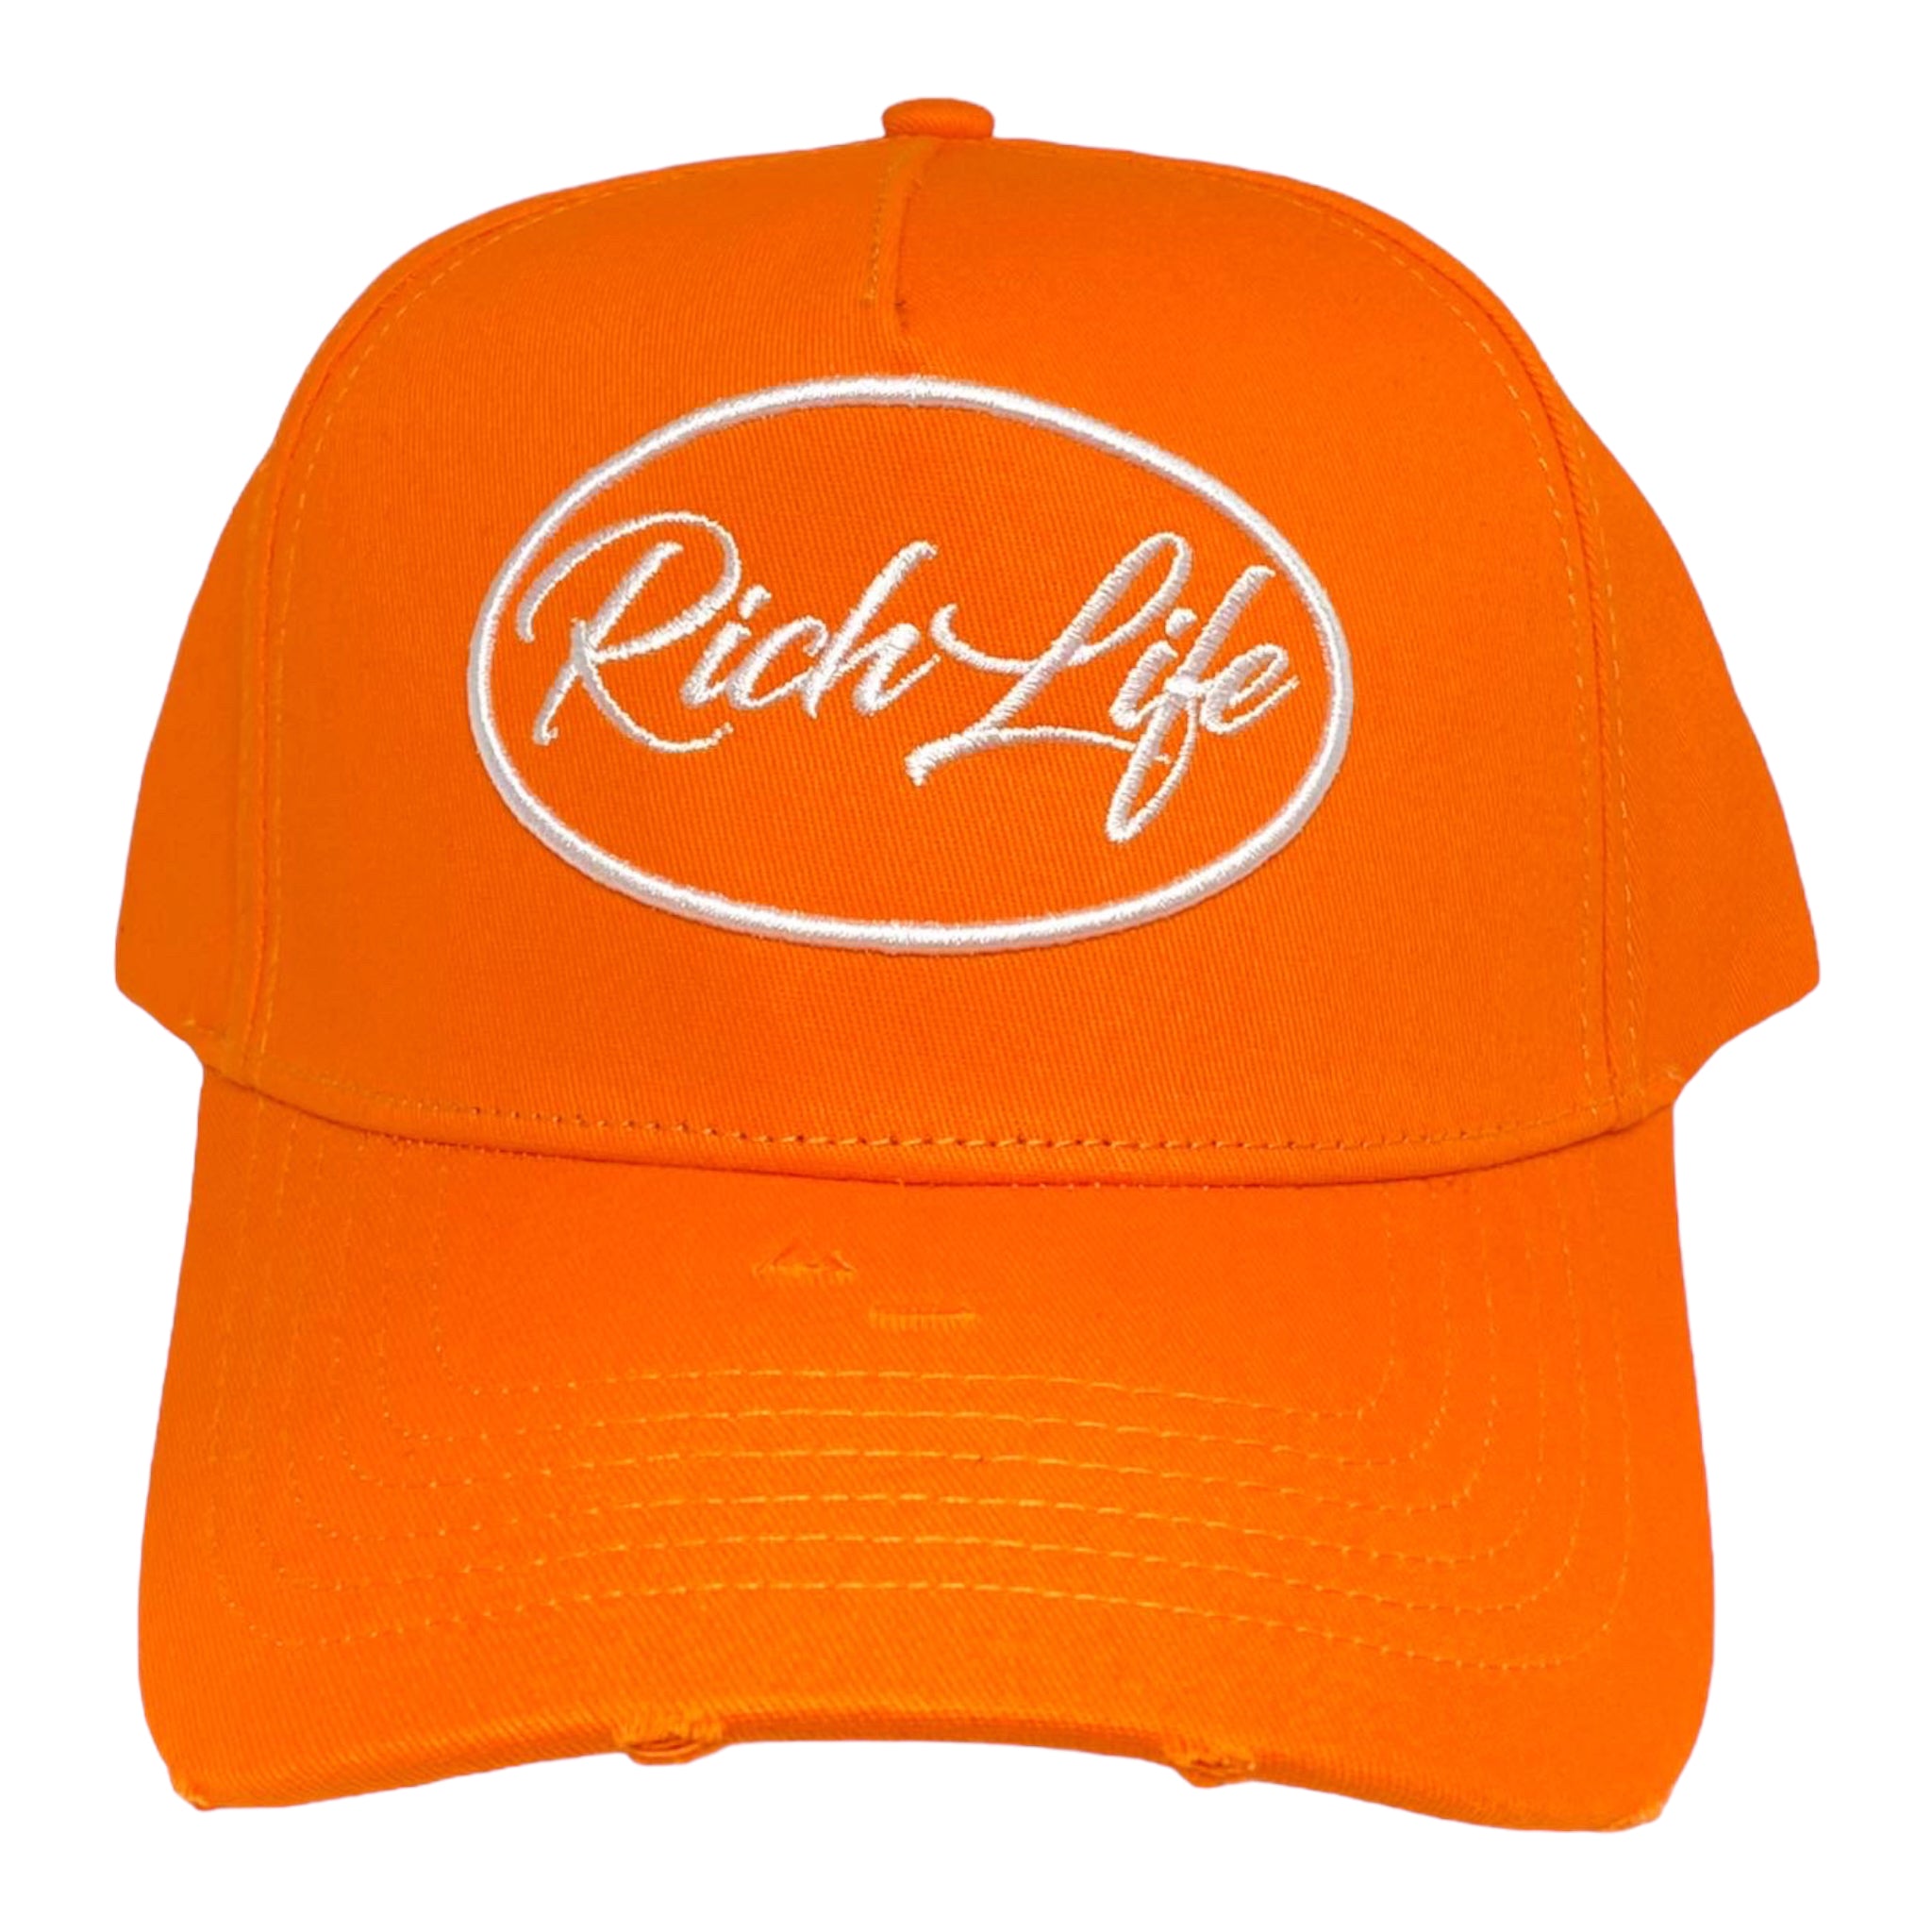 Rich Life “Distressed SnapBack” Hat